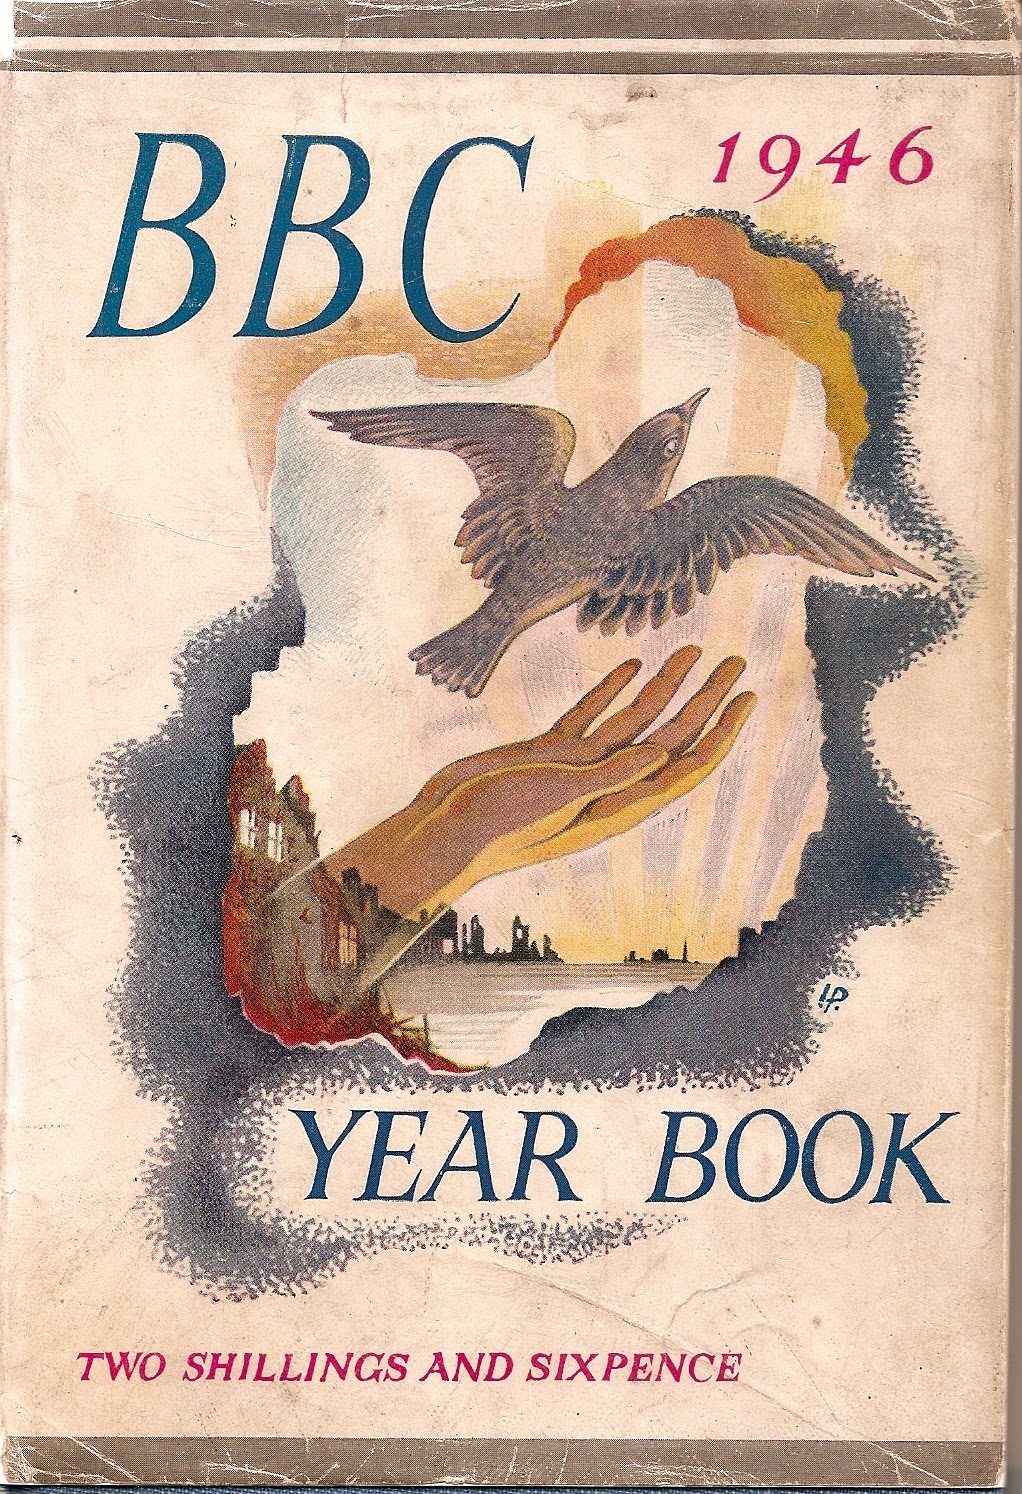 BBC Yearbook 1946 Jacket